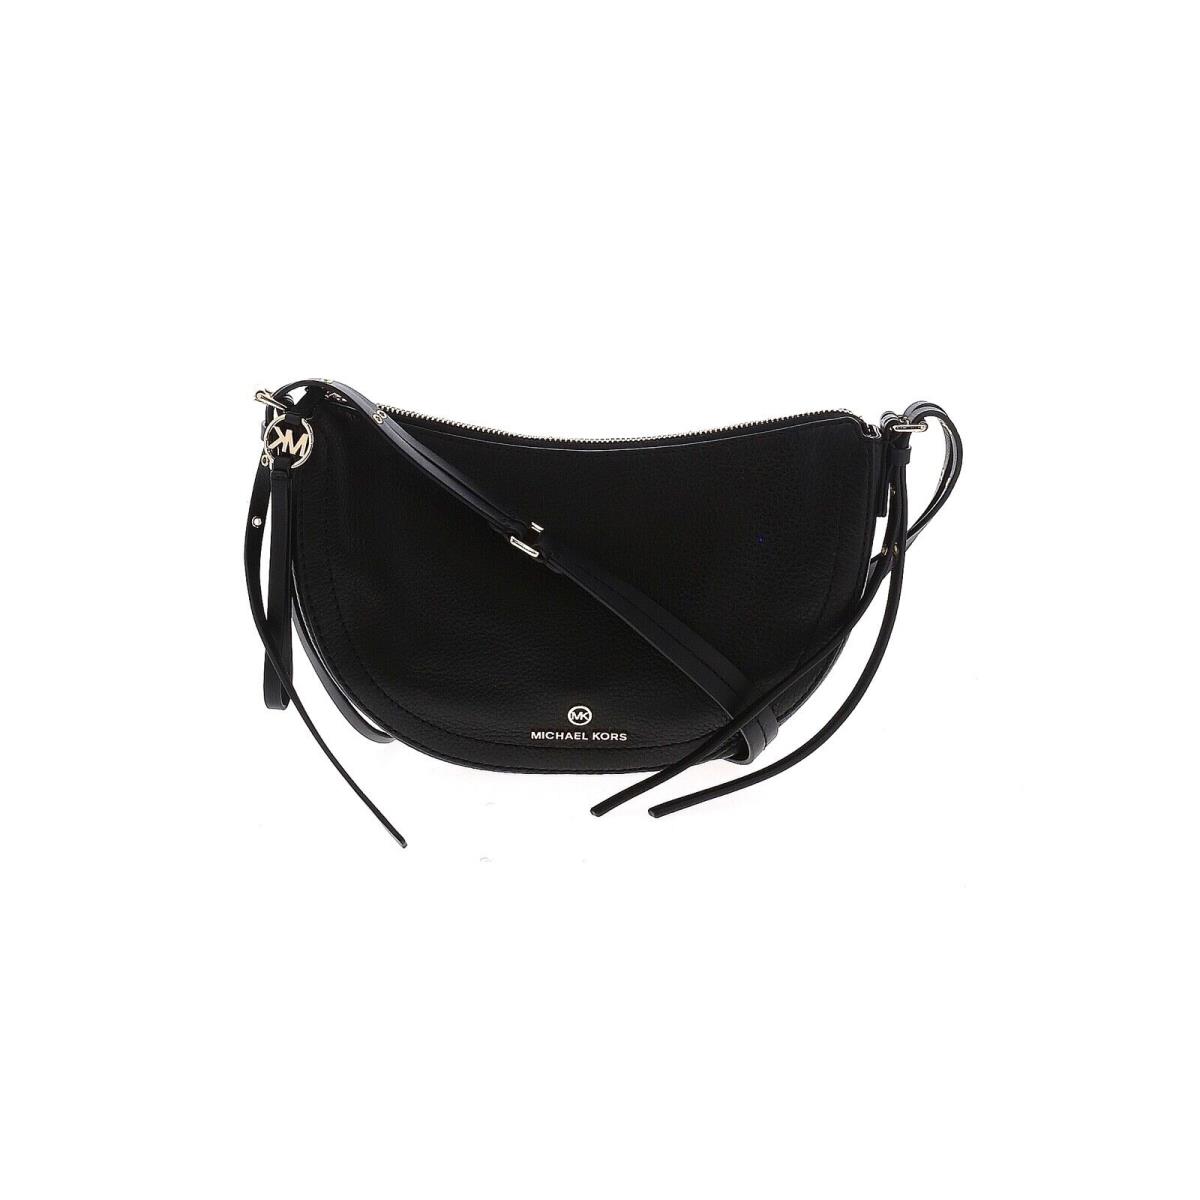 Michael Kors Camden Solid Black Leather Small Messenger Crossbody Bag